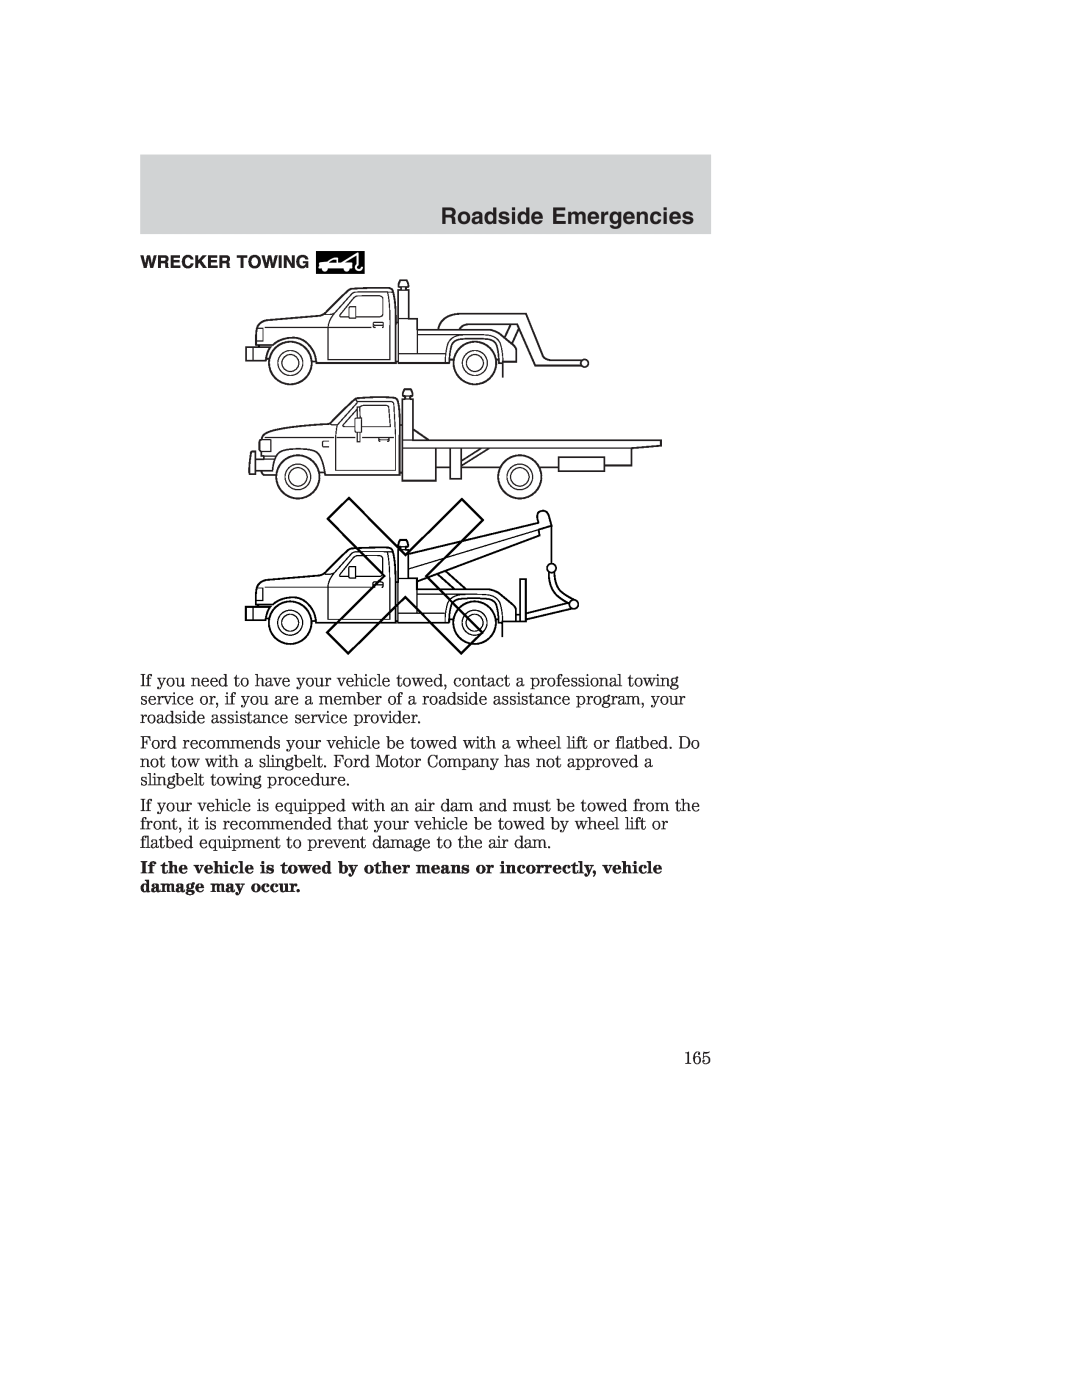 Ford AM/FM stereo manual Wrecker Towing, Roadside Emergencies 